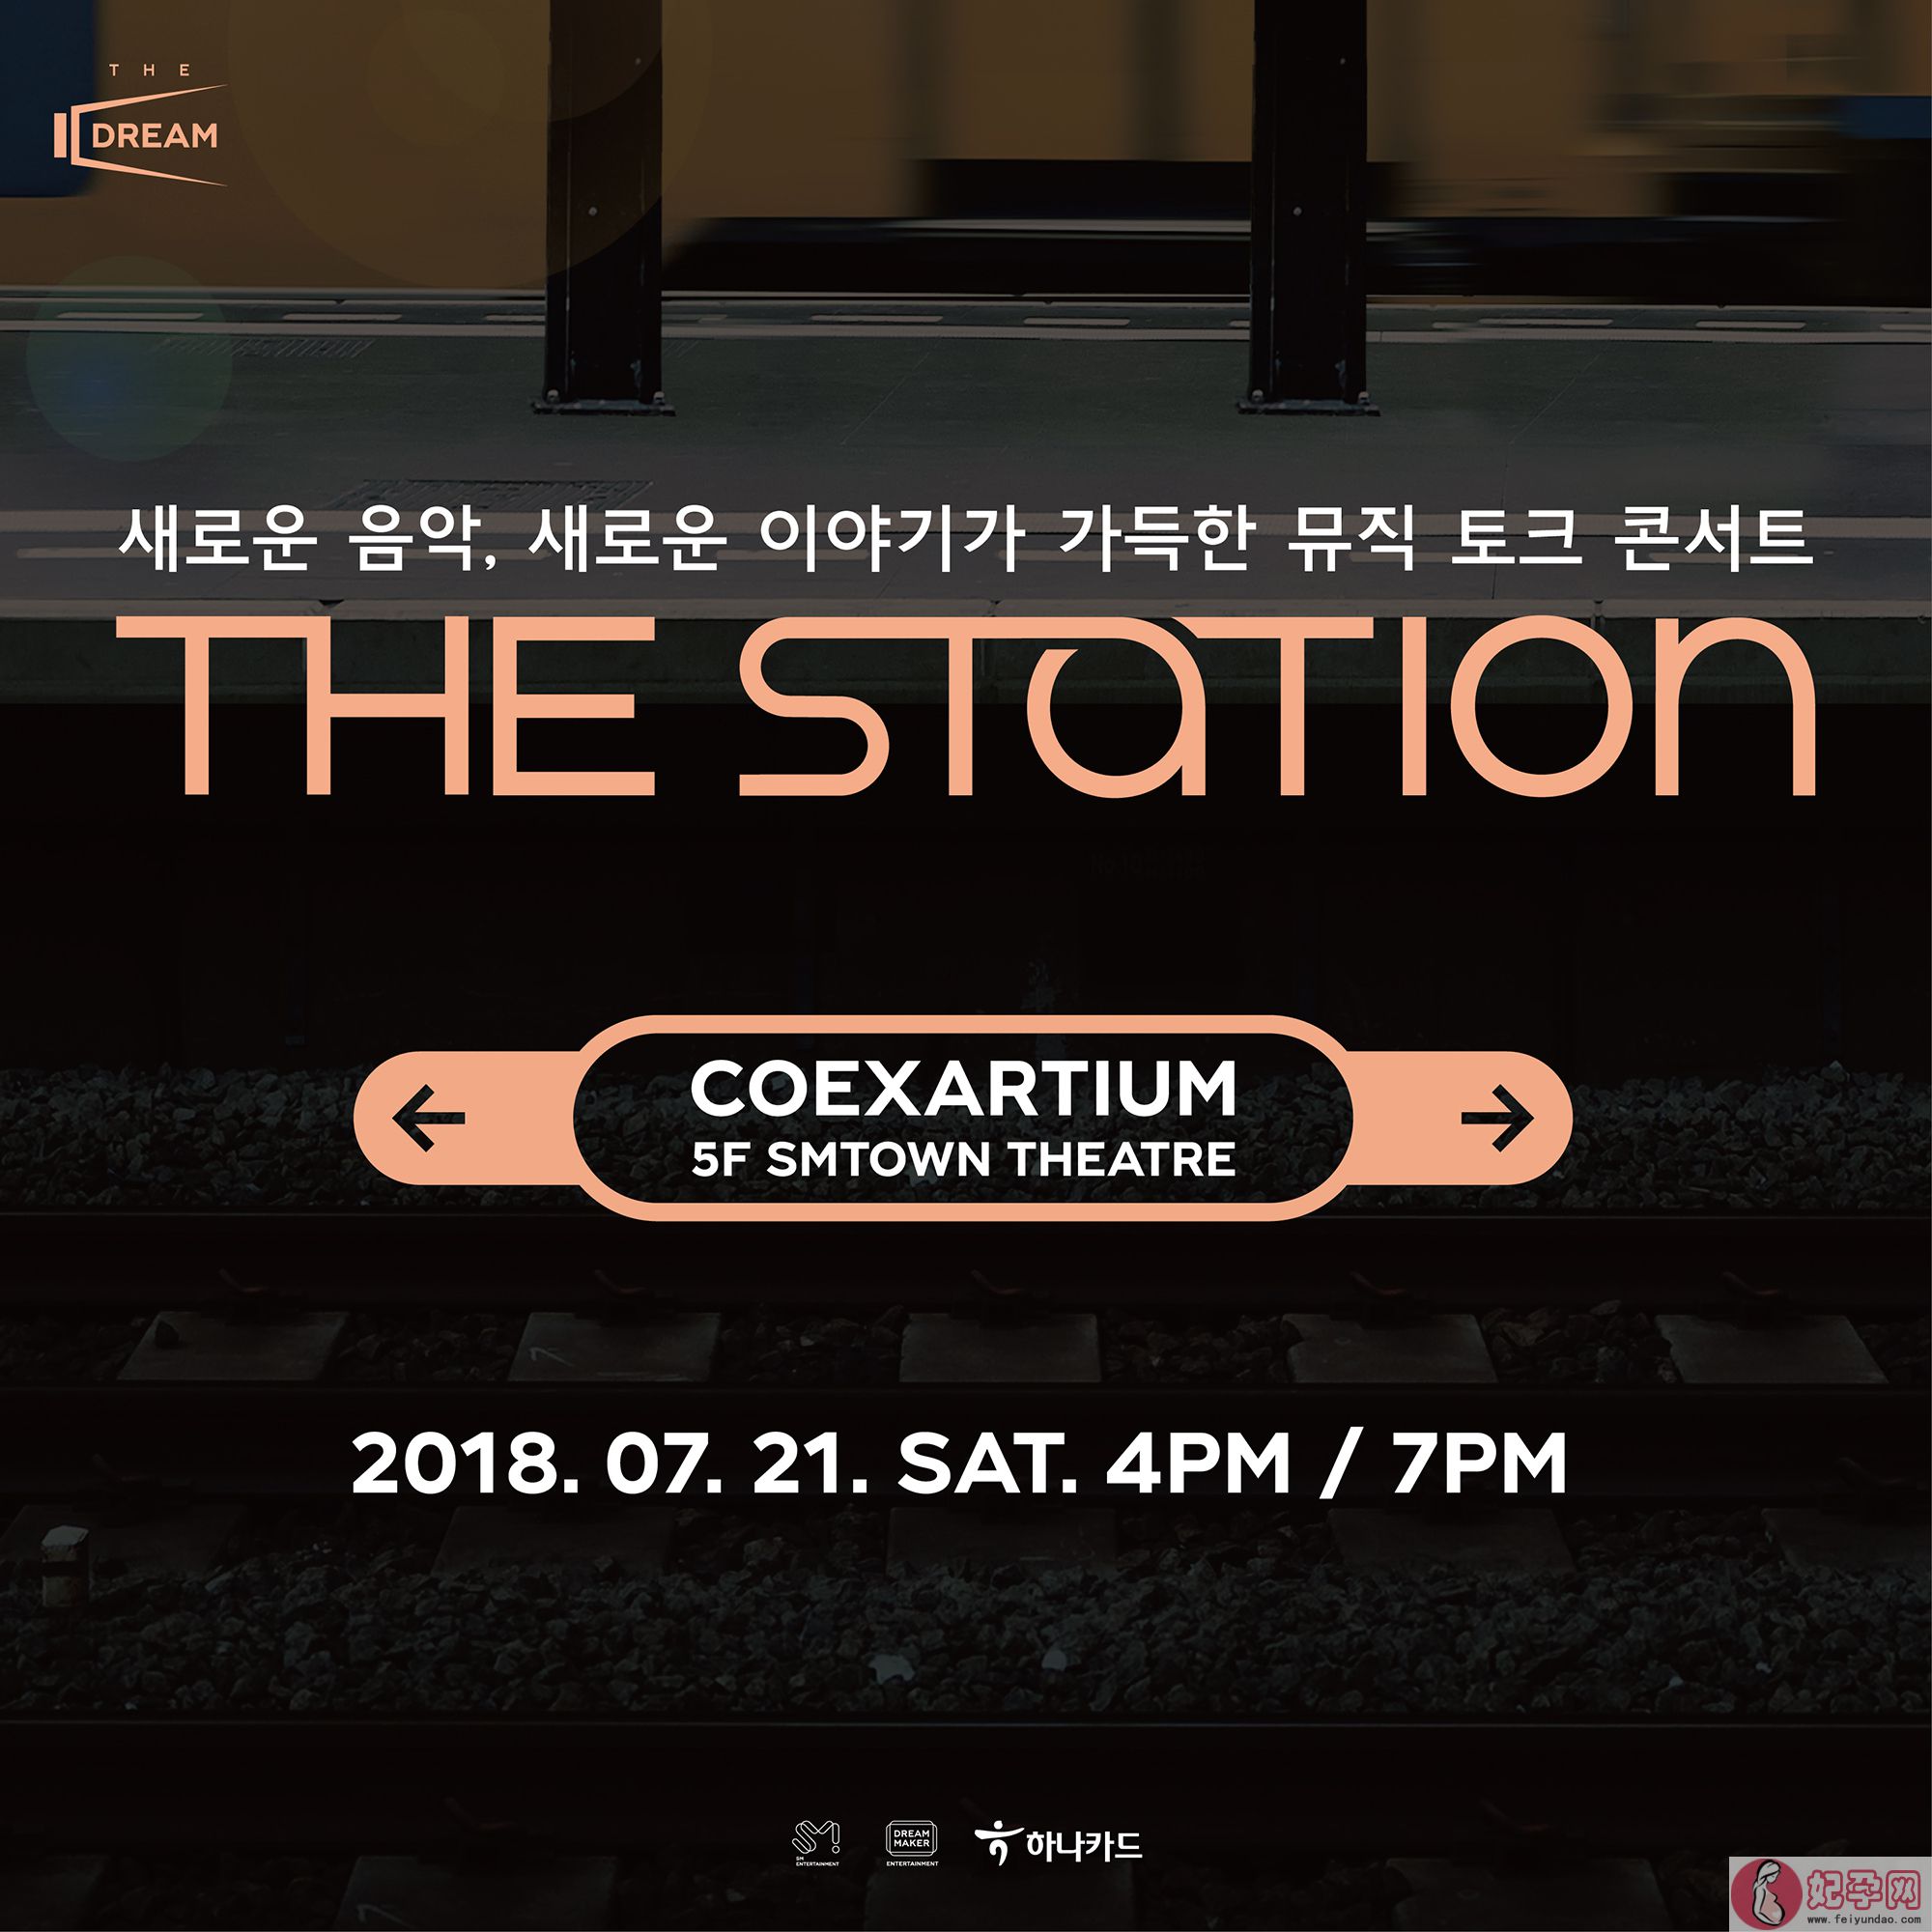 SM娱乐将举办《THE STATION》音乐谈话演唱会